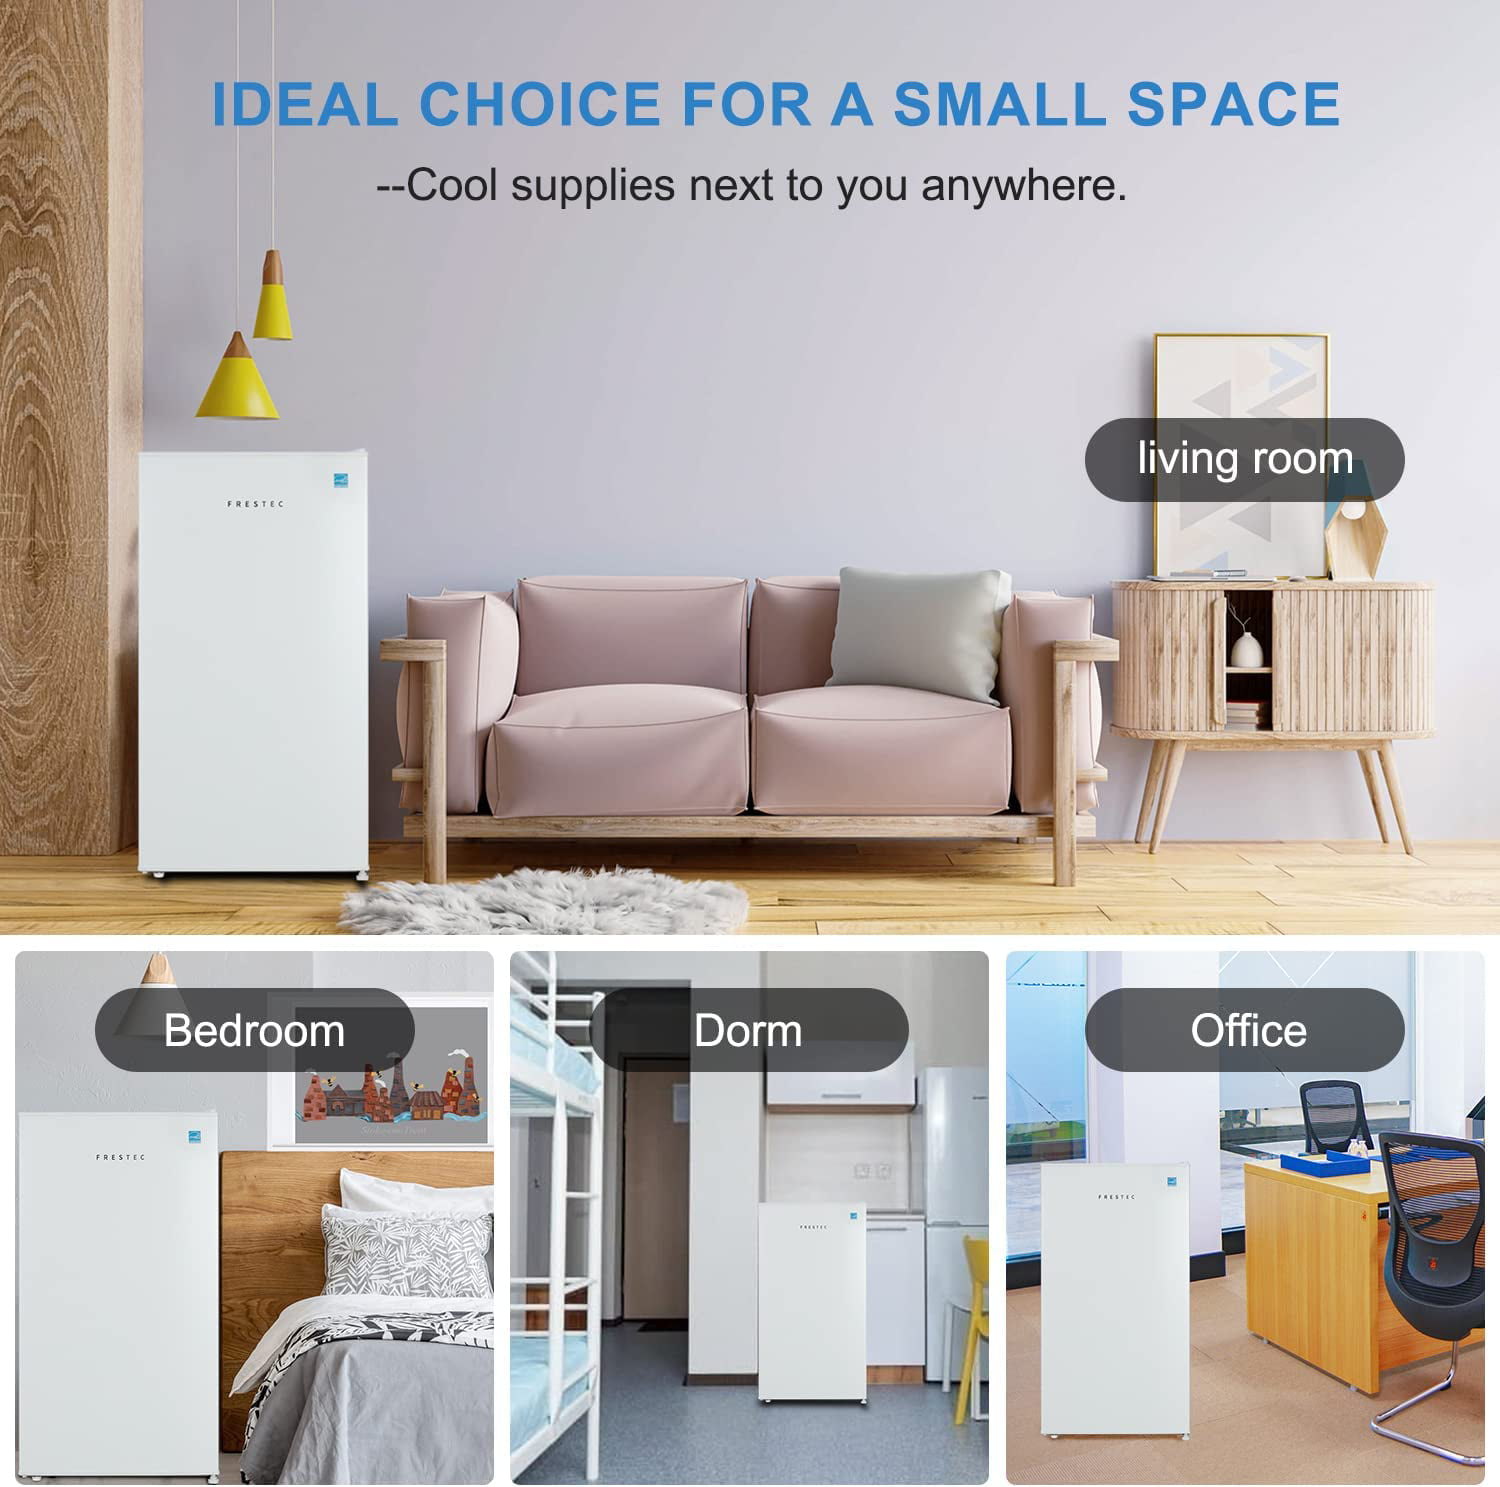 Frestec 3.1 CU' Mini Fridge with Freezer,2-Door Compact Refrigerator,Small  Refrigerator for Bedroom Dorm Office Apartment, Silver (FR 302 SL) - Yahoo  Shopping